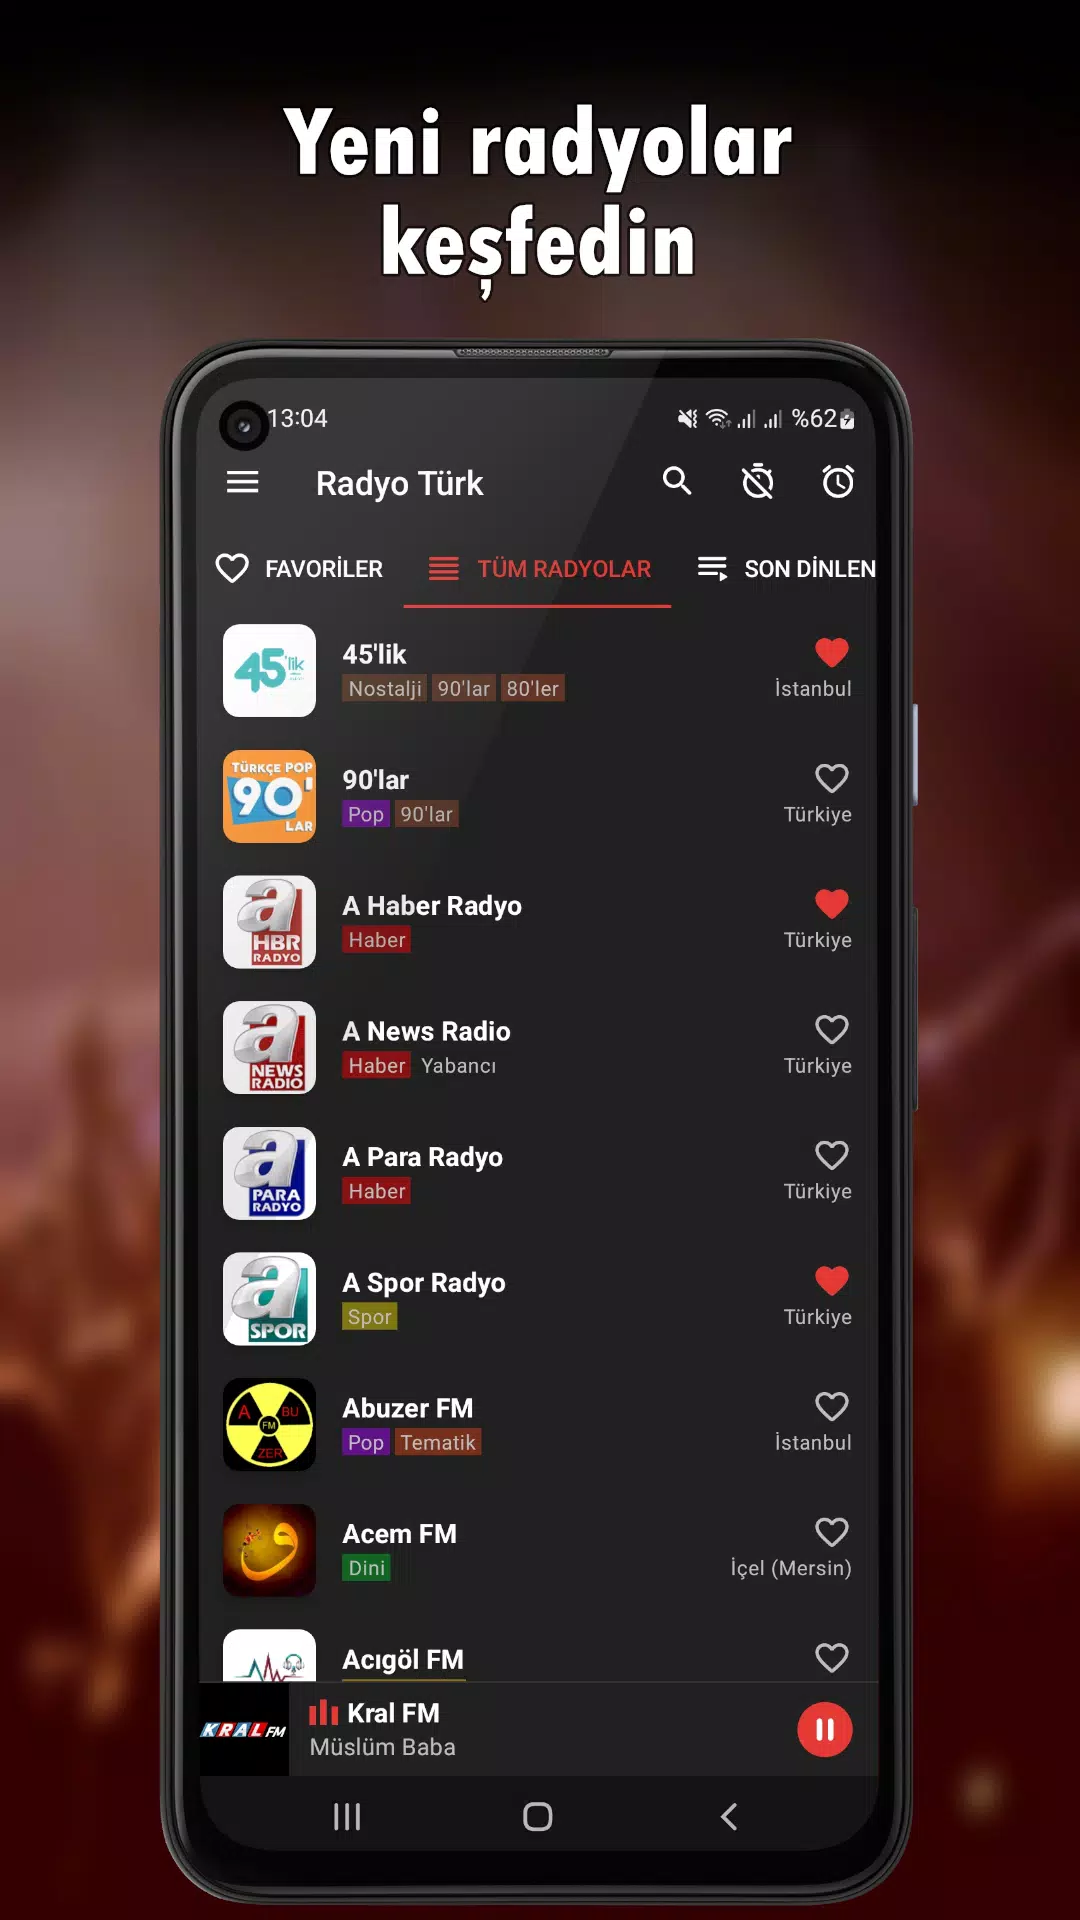 Radyo Türk APK pour Android Télécharger